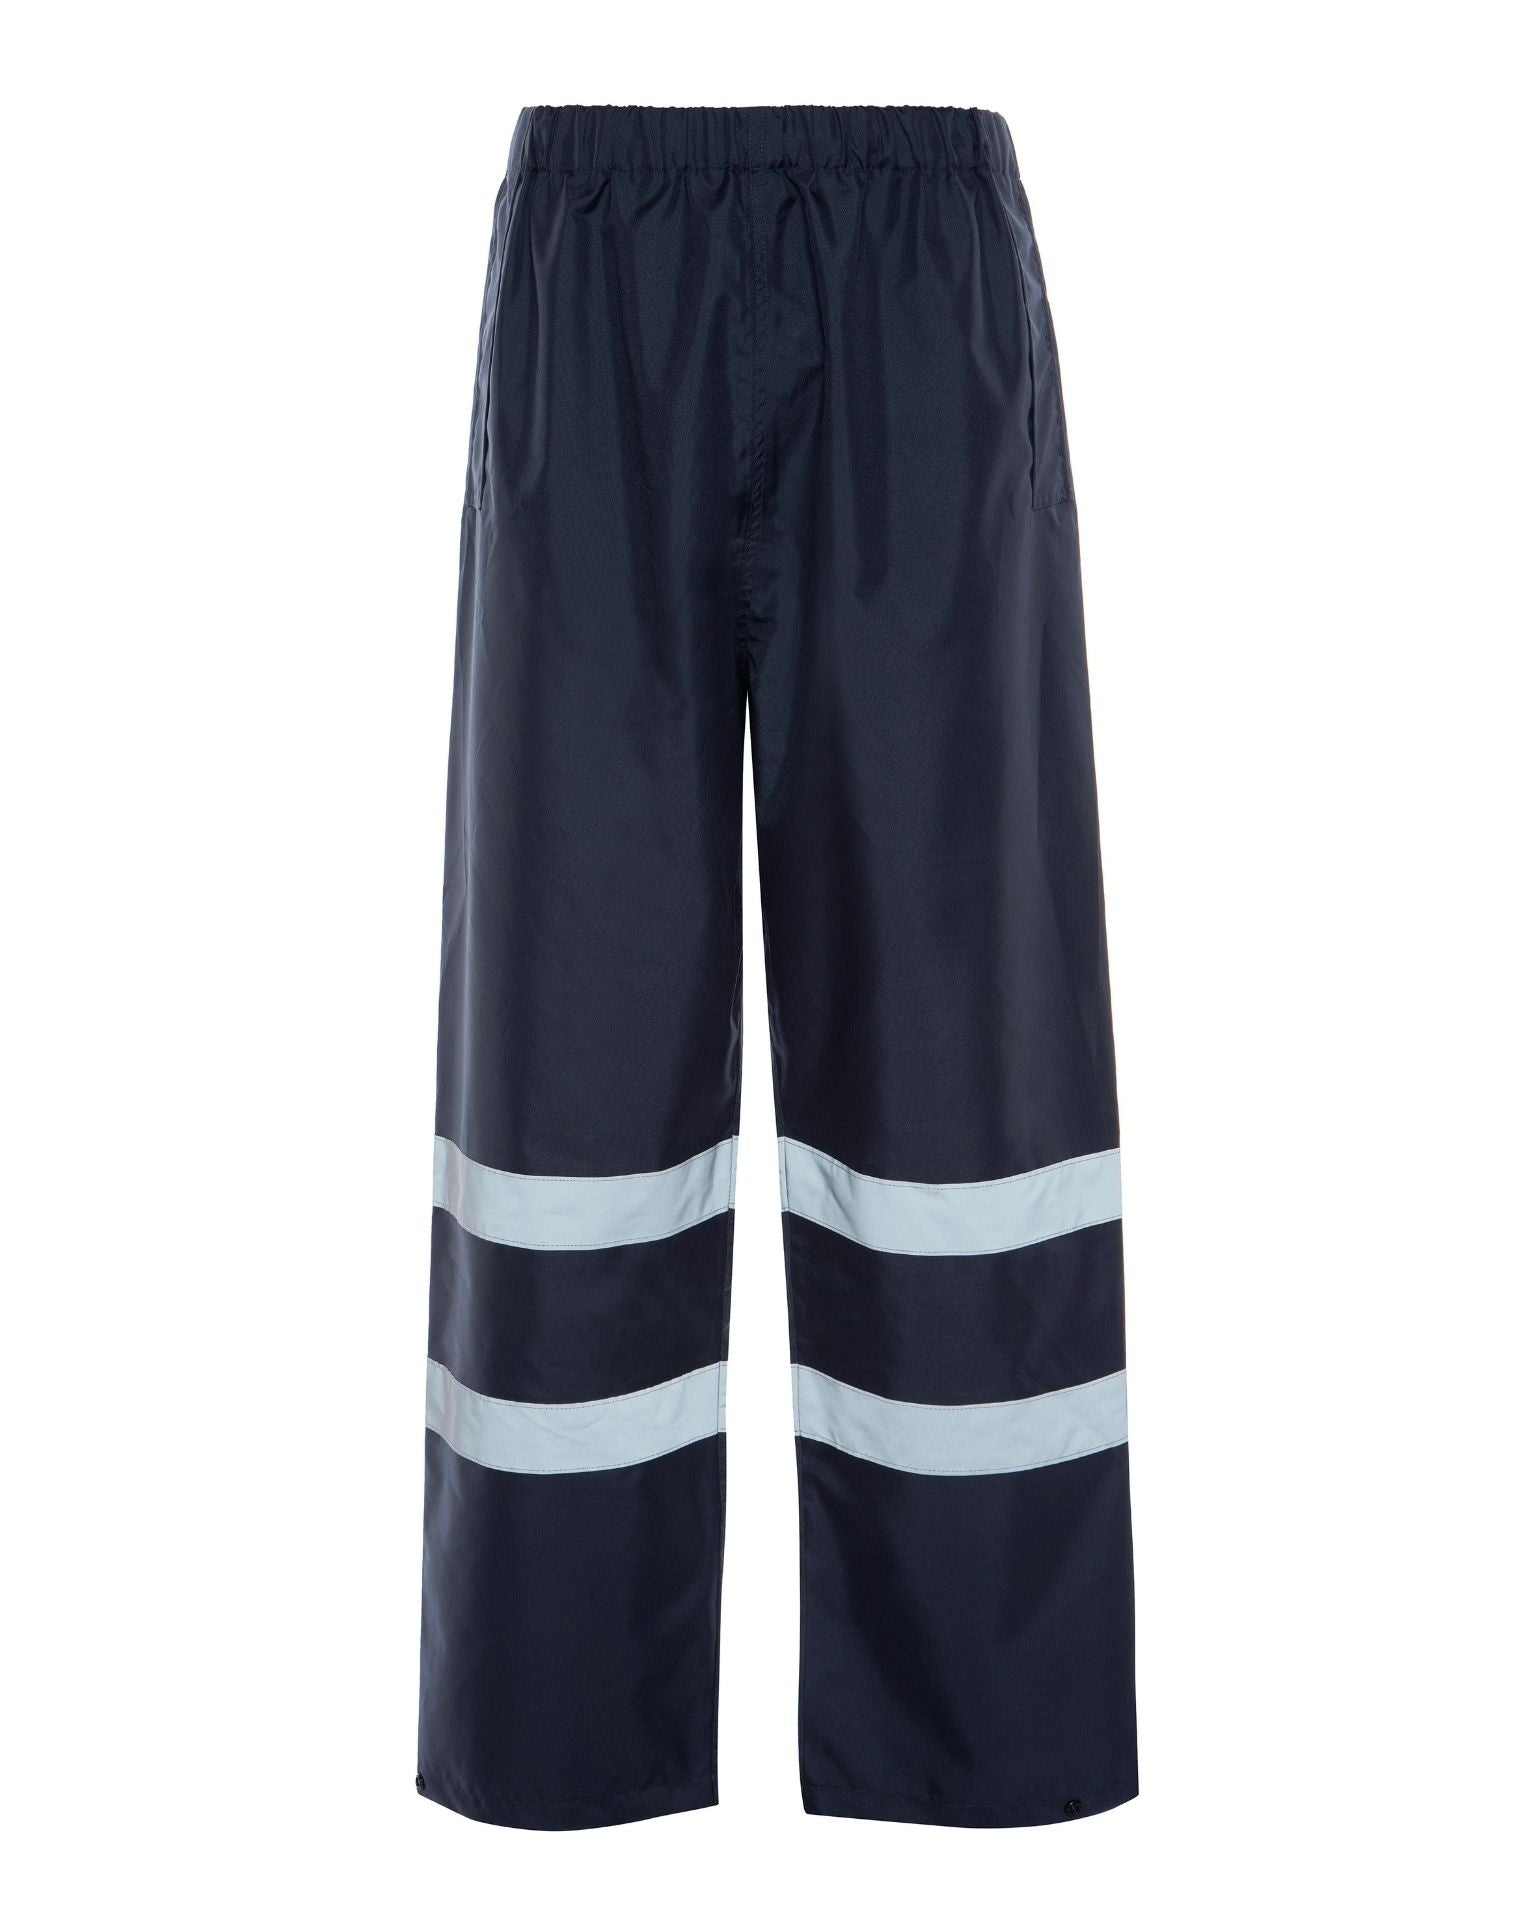 UPA891 - Lightweight Rain Suit Pants - Navy